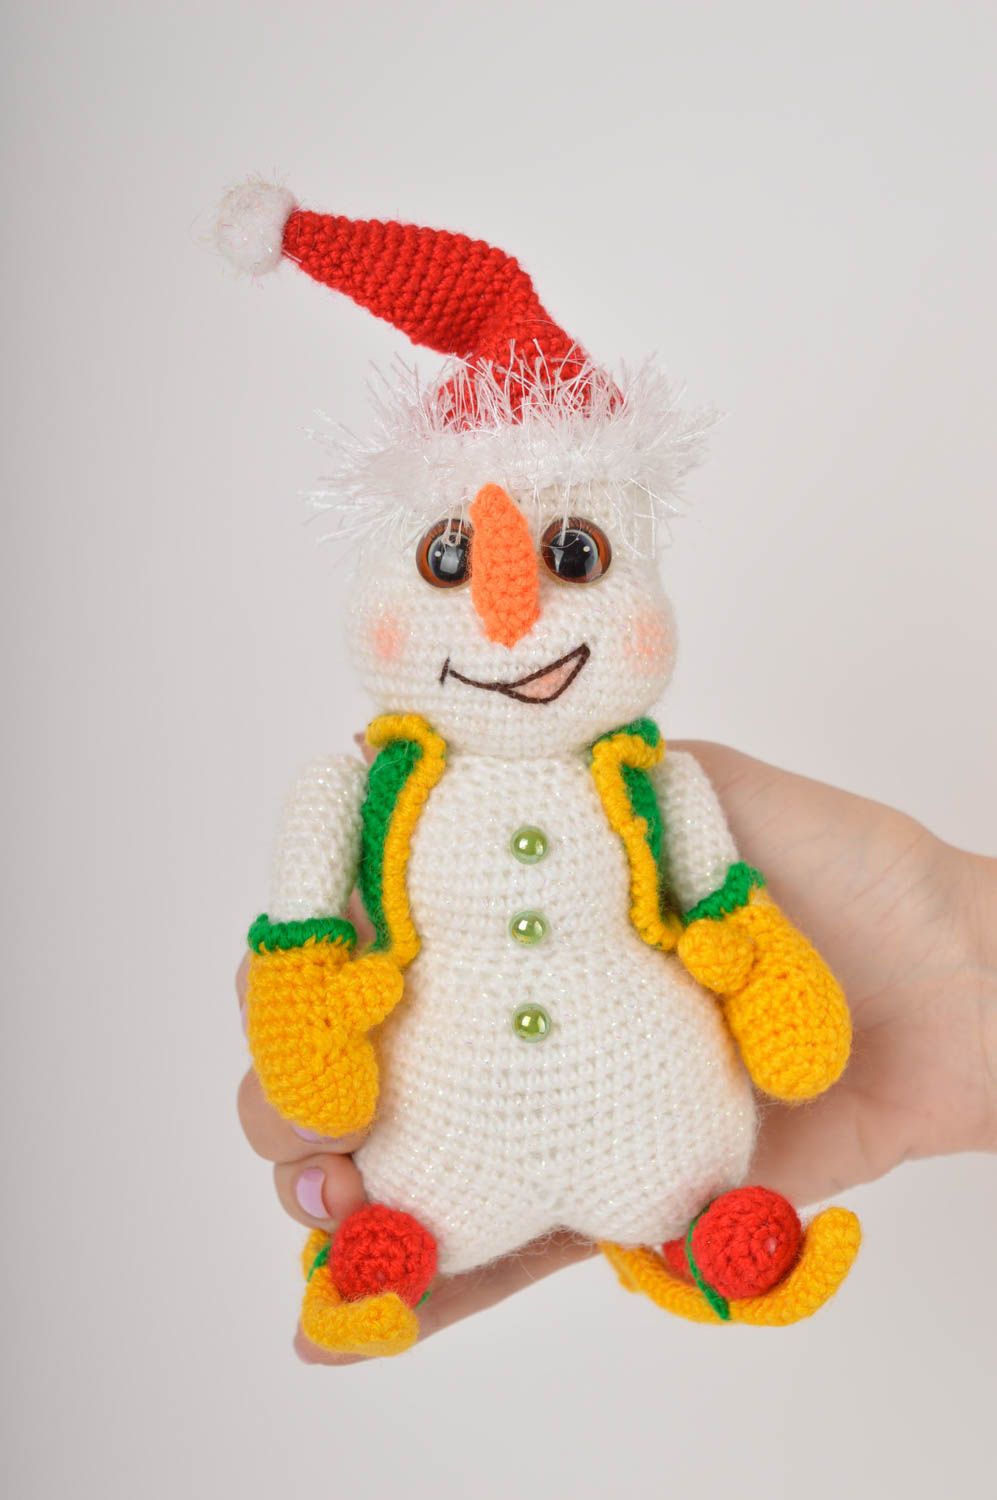 Muñeco de ganchillo hecho a mano juguete tejido a crochet regalo original foto 2